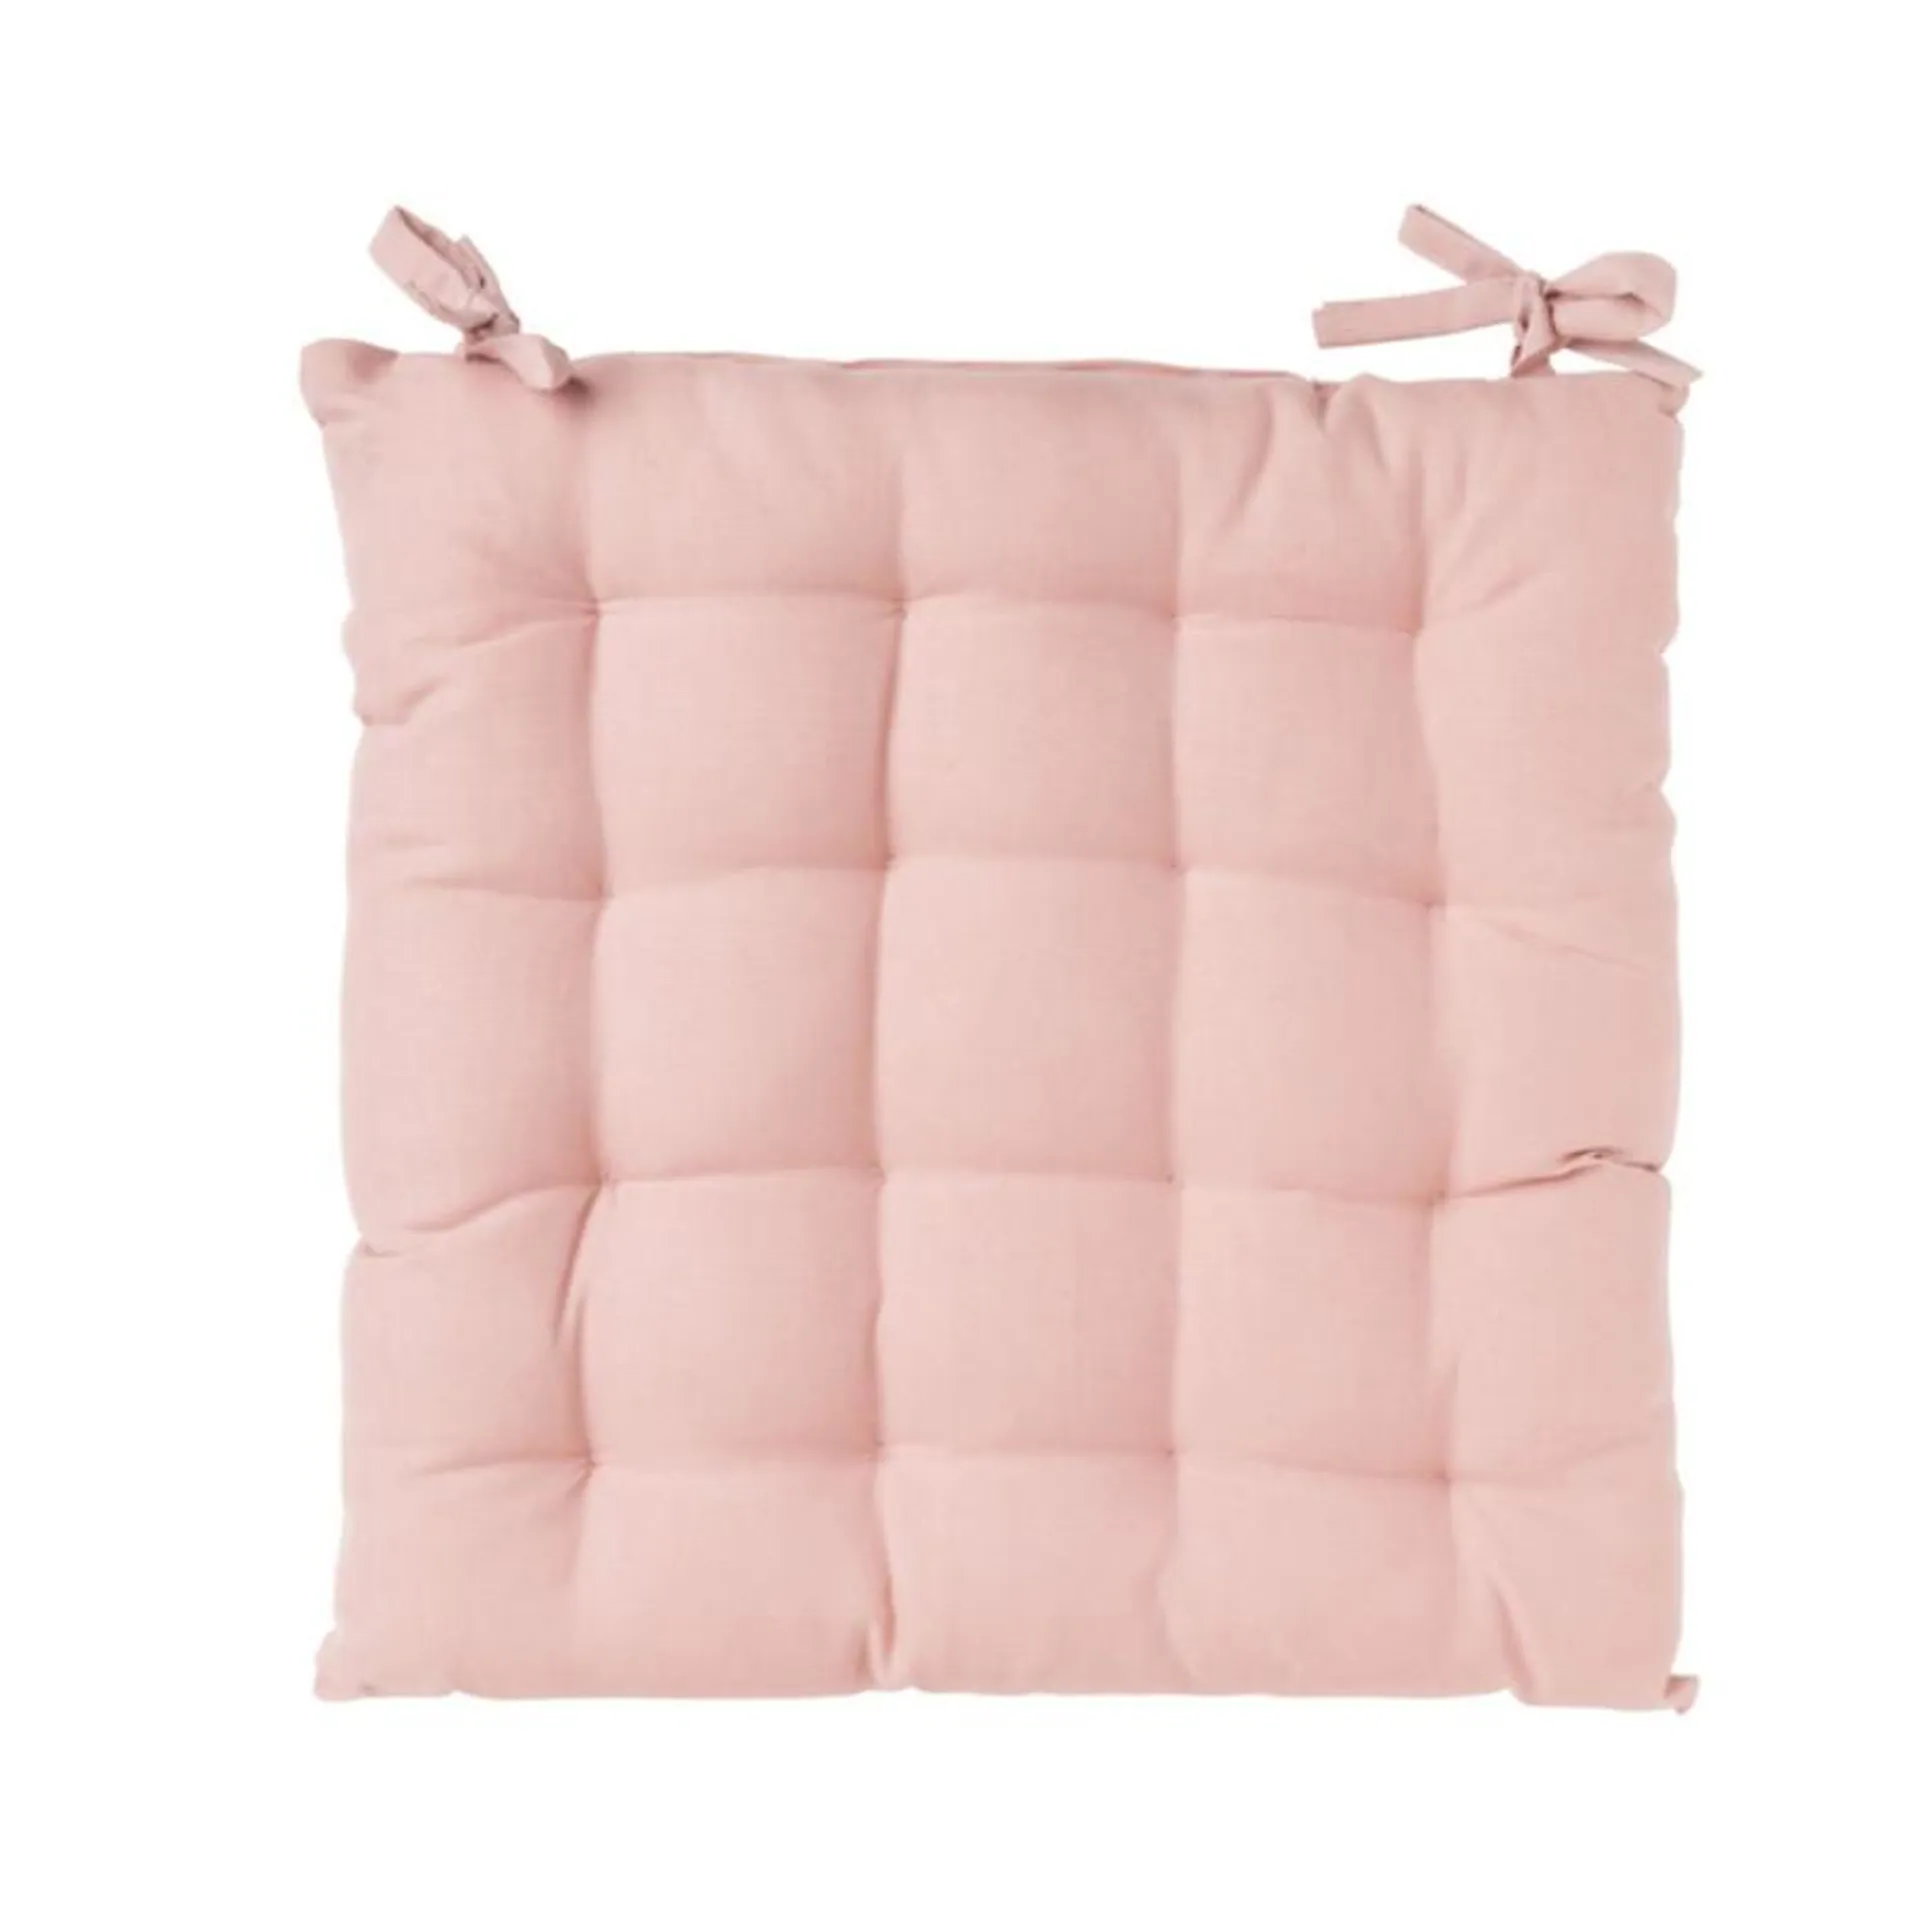 Zitkussen roze - polyester - 40x40 cm